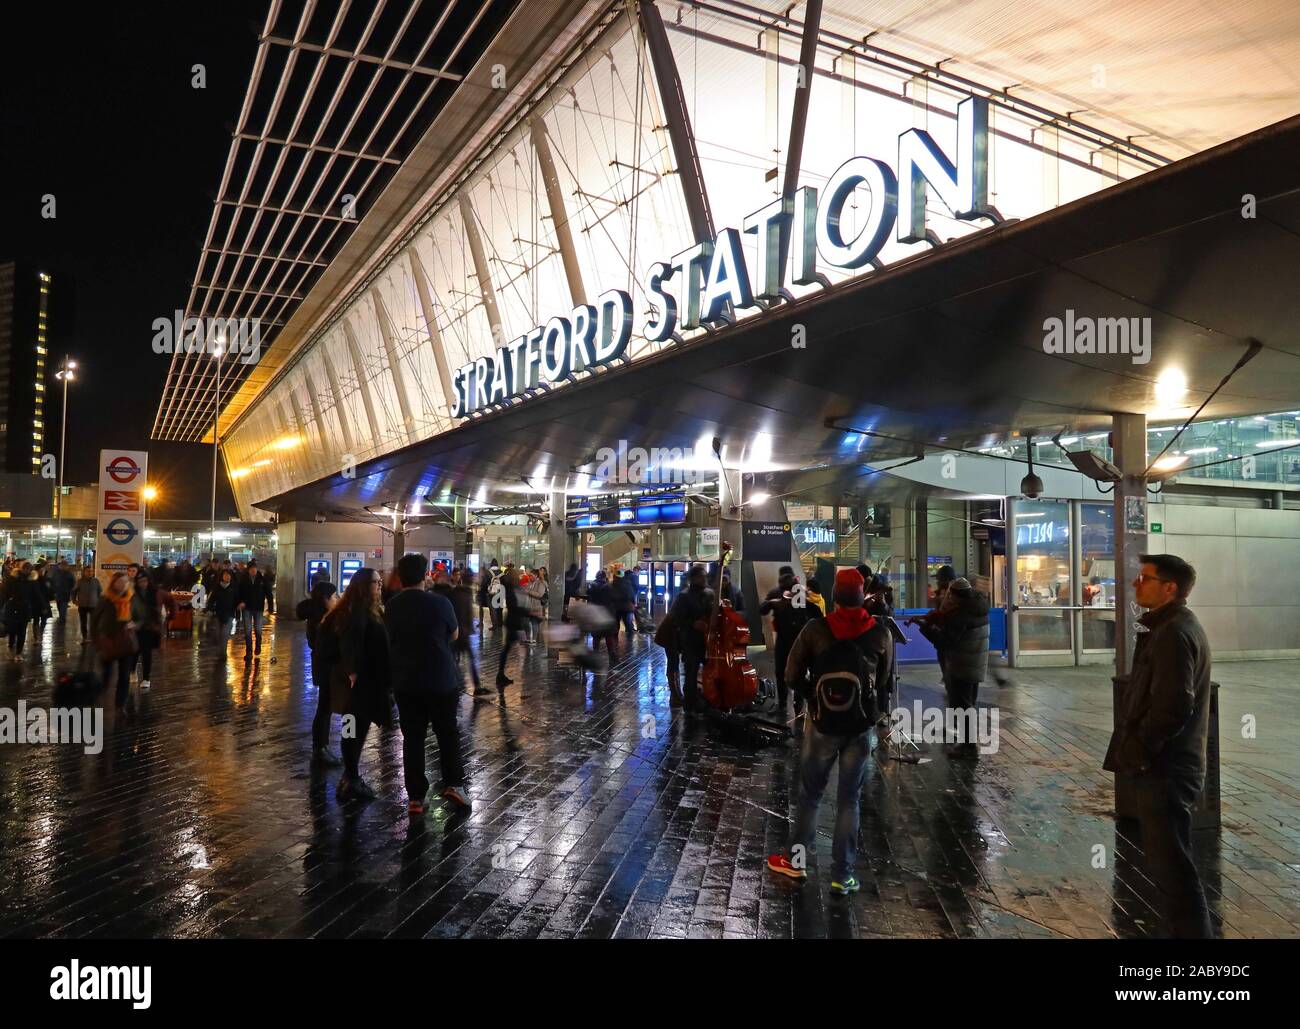 Stratford Regional and Stratford International station,Stratford City,Olympic Park, Montfichet Rd, Londra, Inghilterra, Regno Unito, E20 1EJ Foto Stock